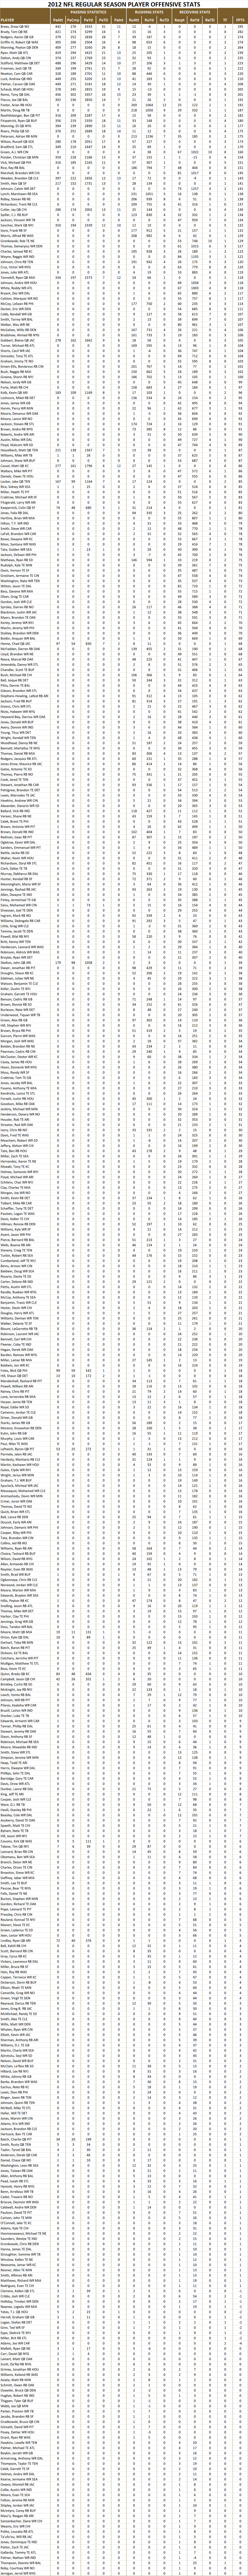 2012 National Football League Pool Season Player Offensive Stats